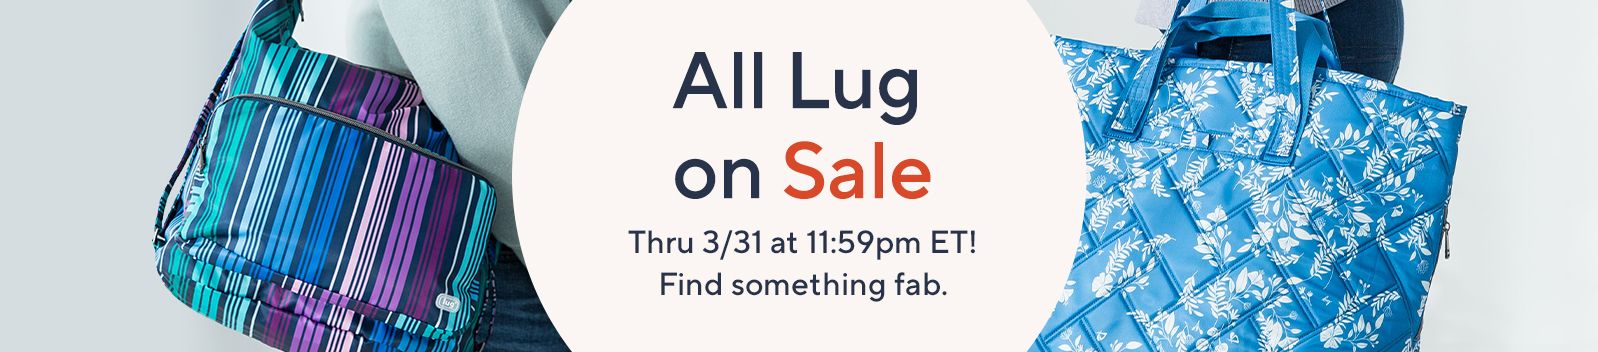 All Lug on Sale  Thru 3/31 at 11:59pm ET! Find something fab.